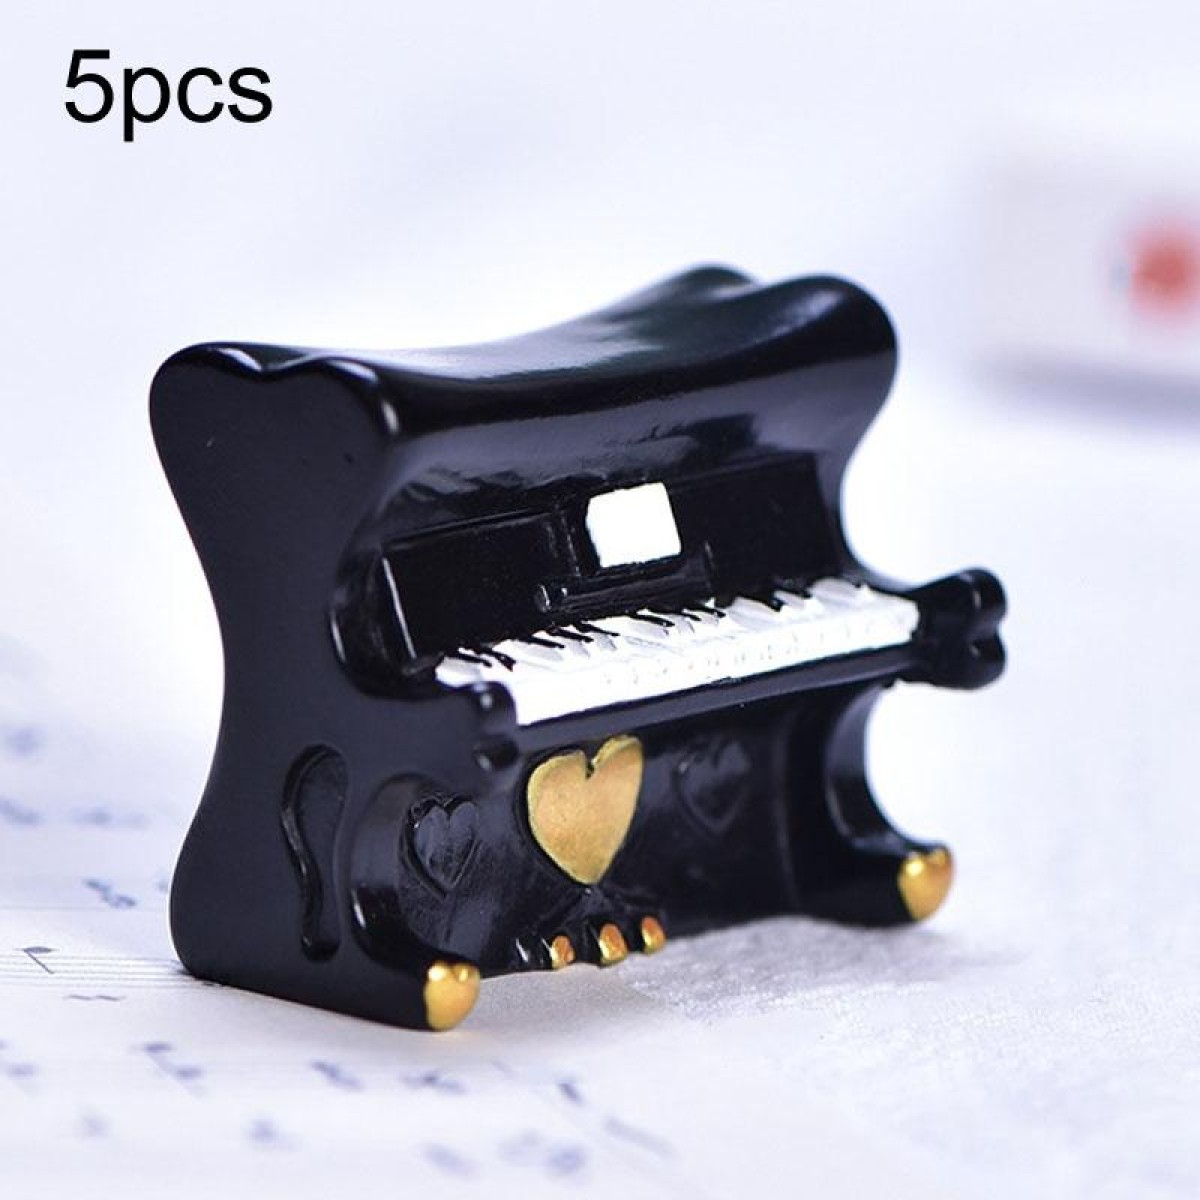 5pcs Micro Landscape Simulation Musical Instrument Resin Ornament Miniature Desktop Decoration, Style: No.12 Black Piano